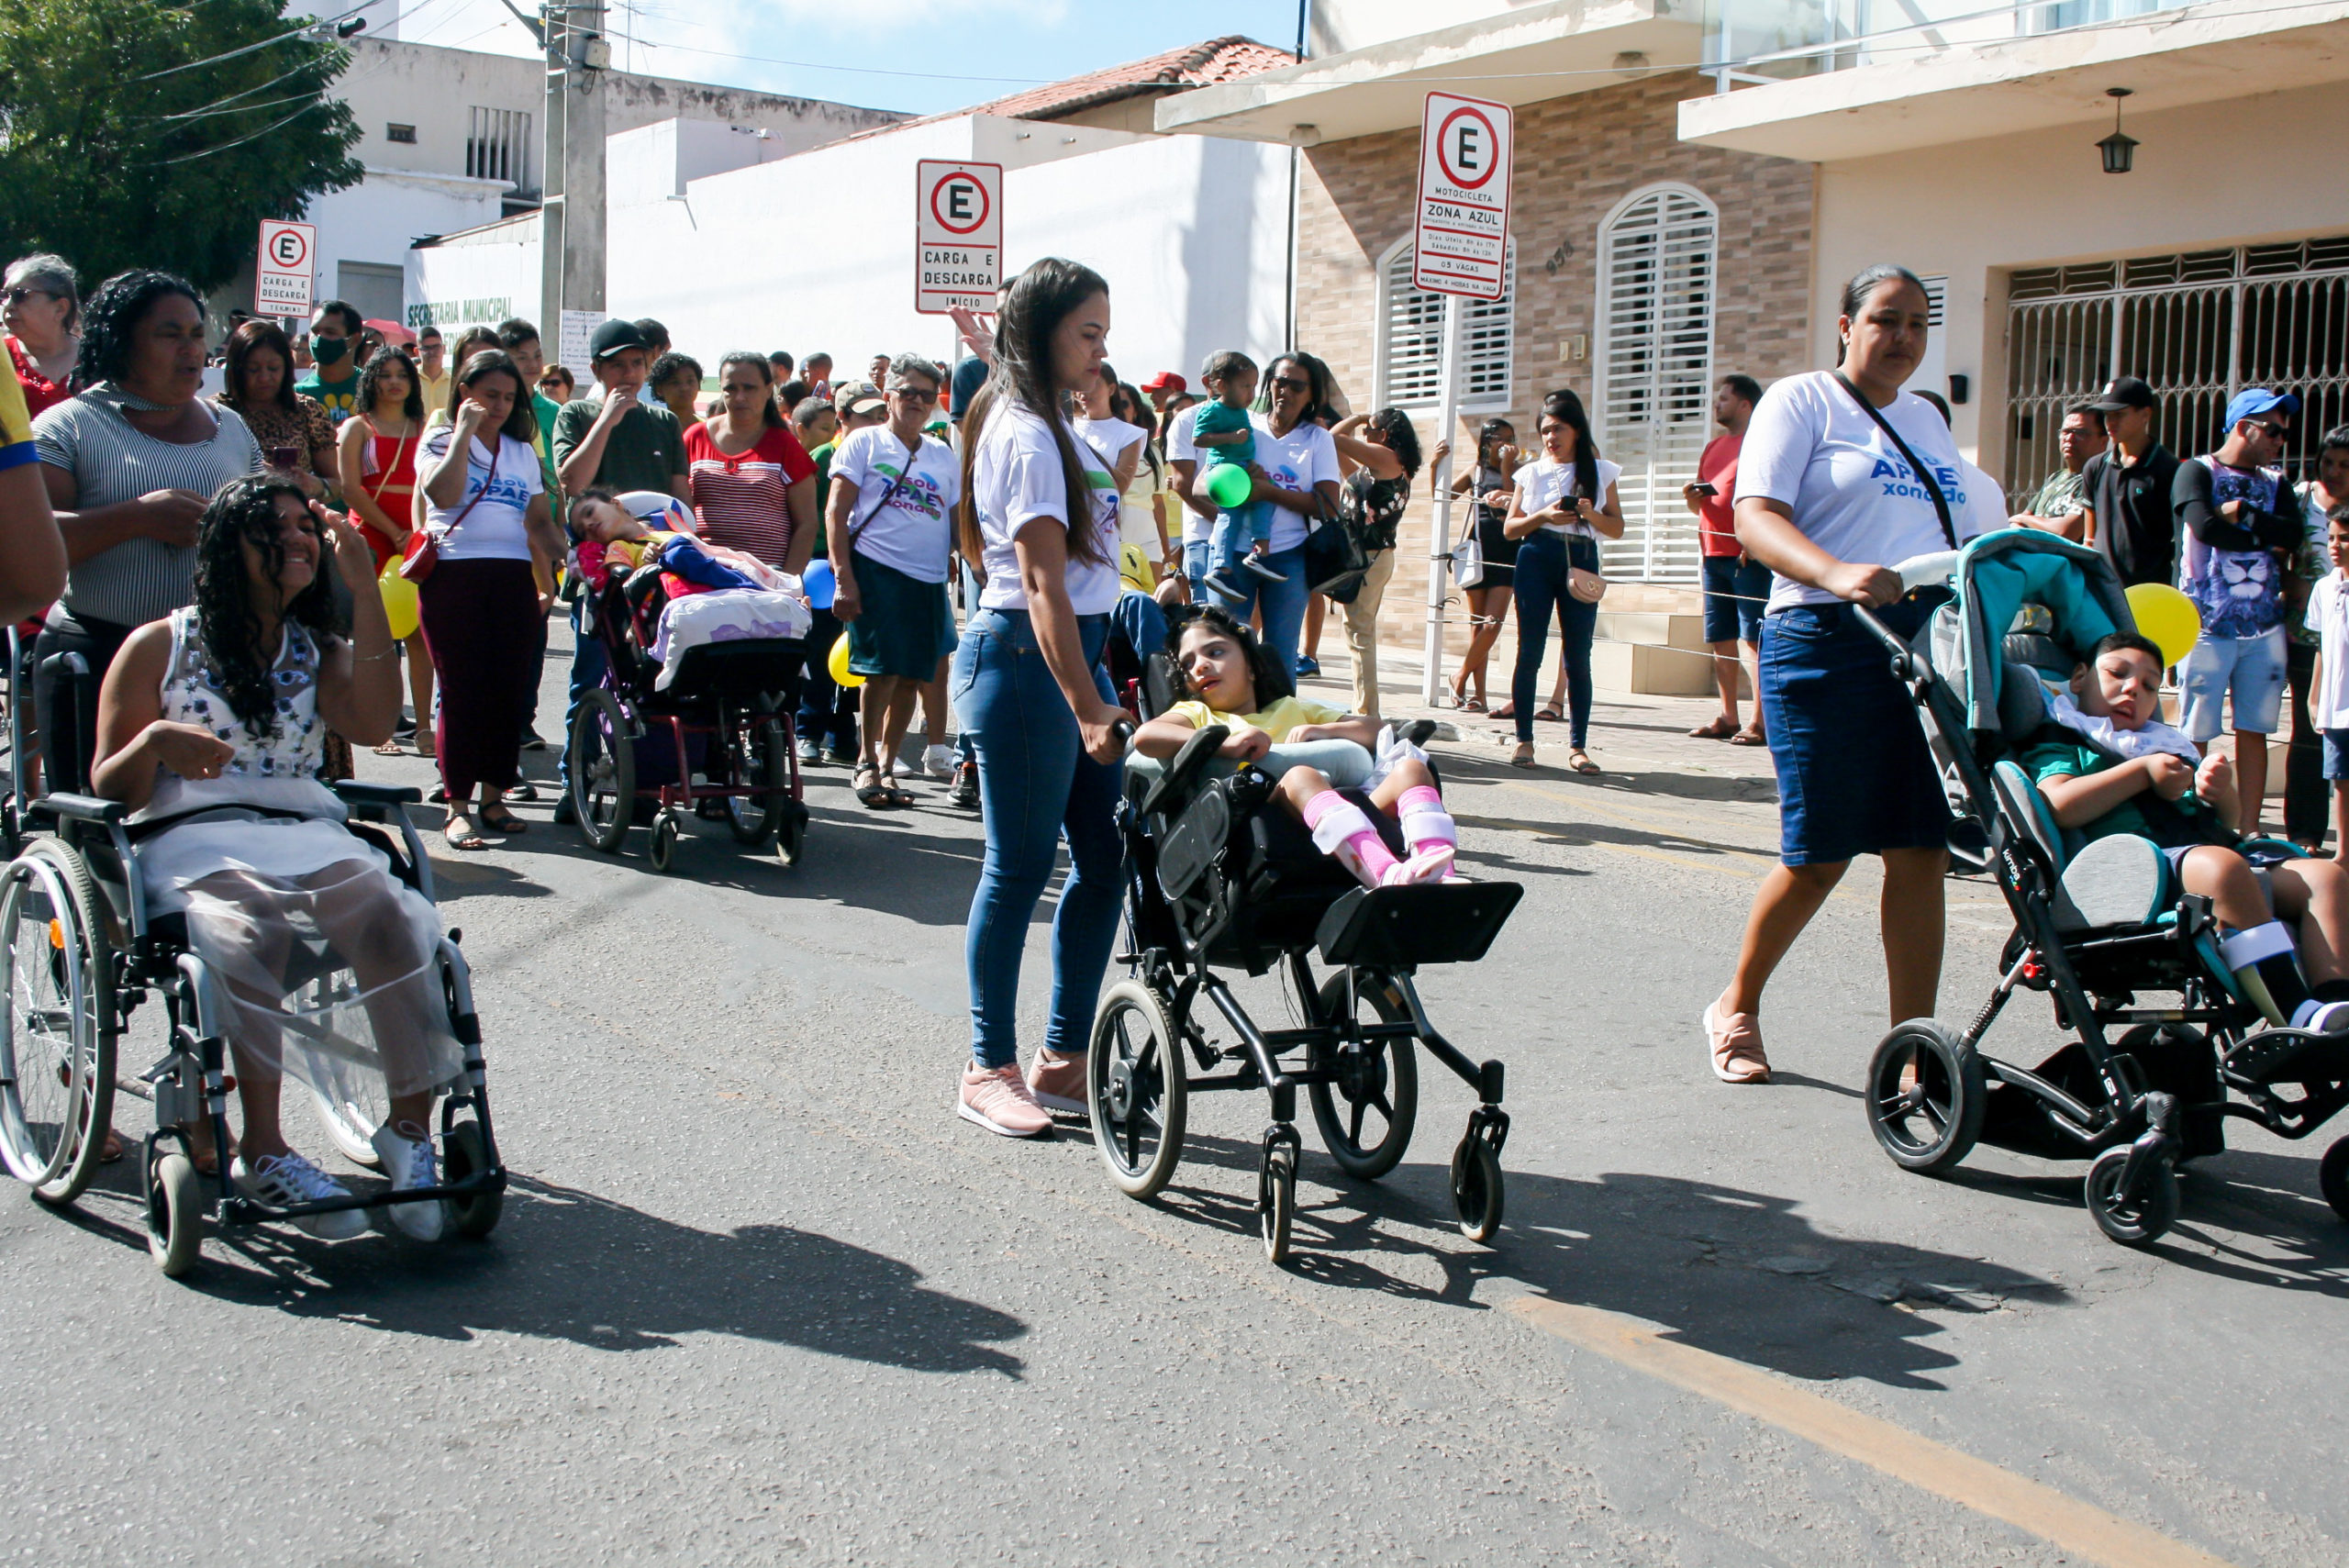 Desfile cívico atraiu grande público à Enock Ignácio